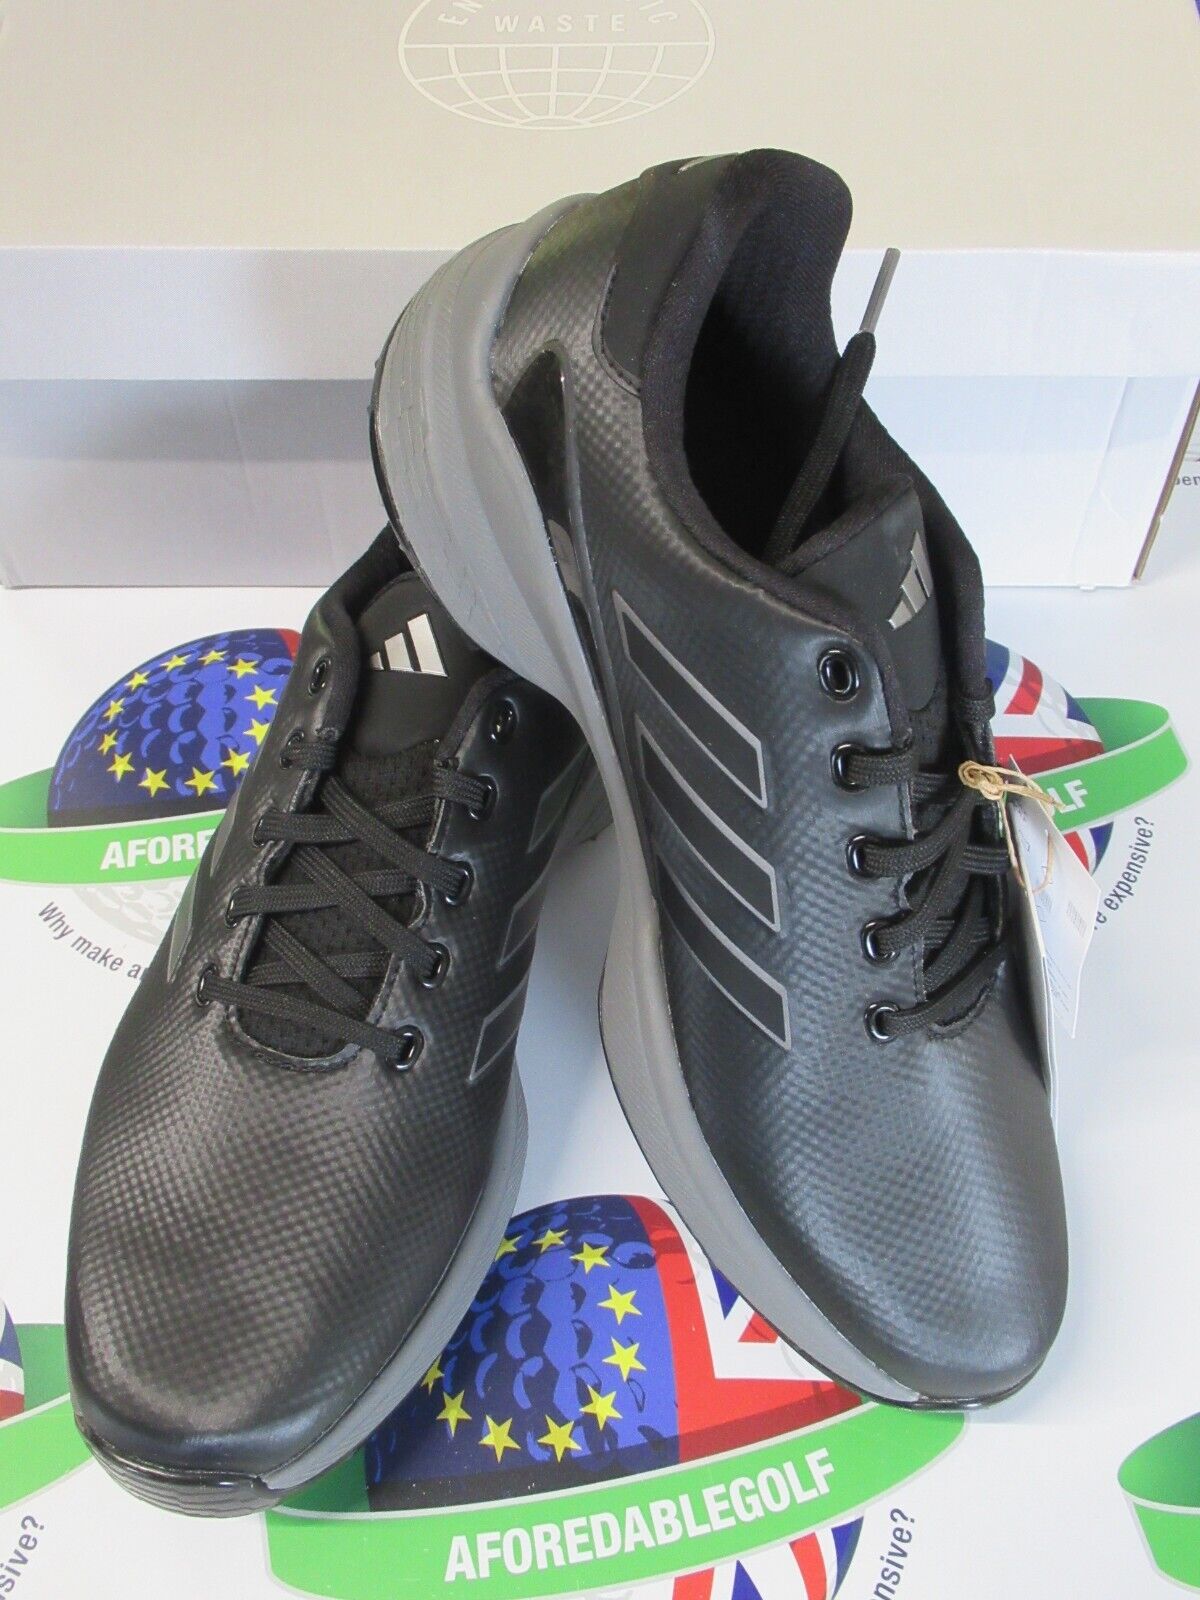 adidas zg23 waterproof golf shoes black/grey uk size 12